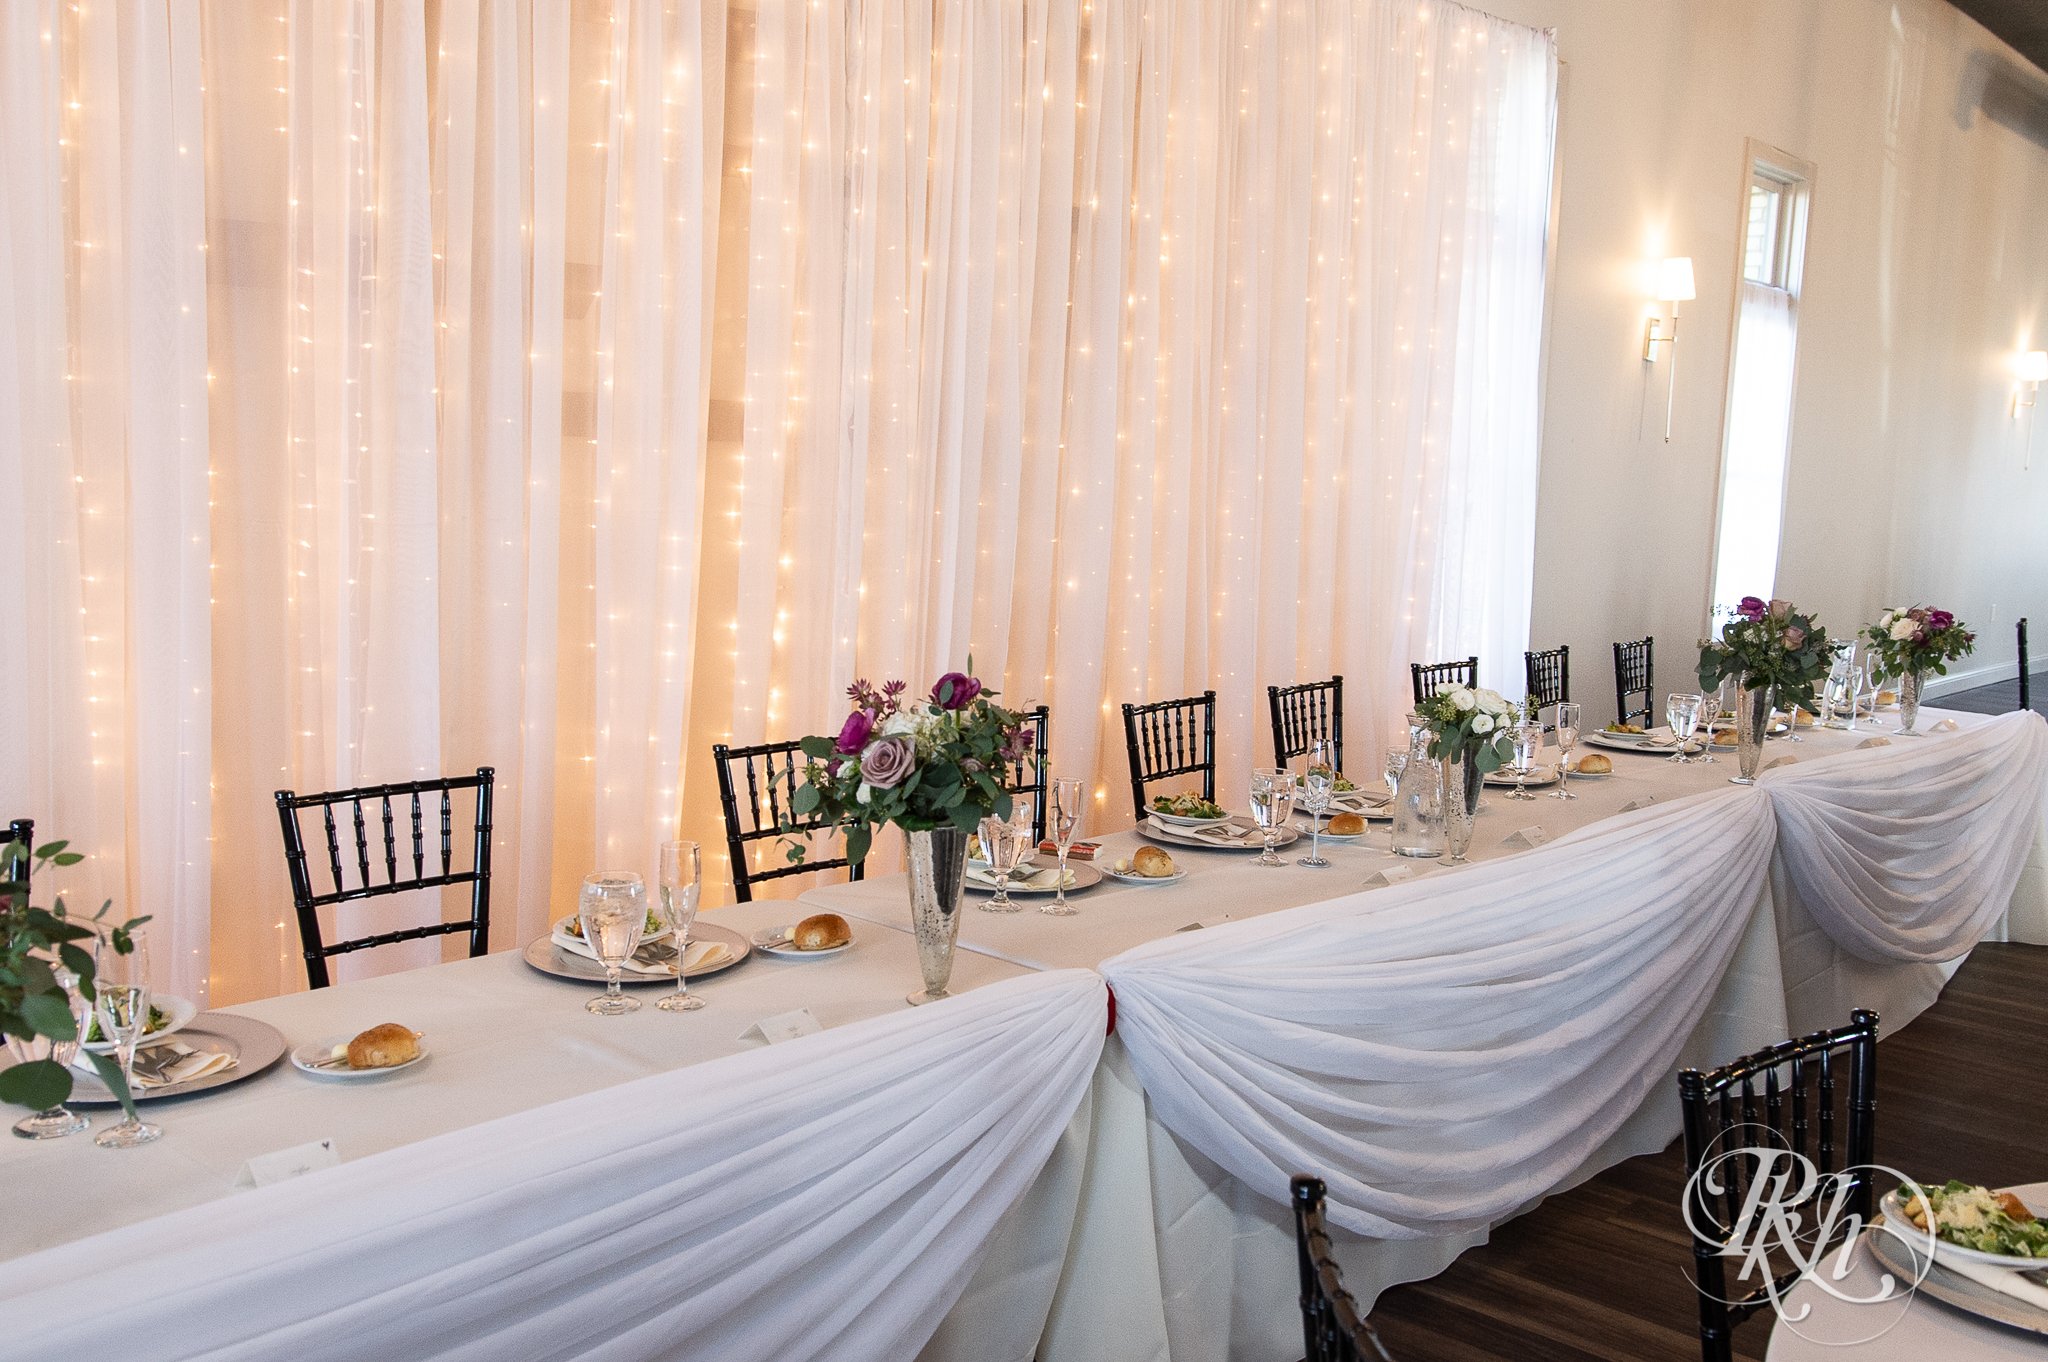 Indoor wedding reception setup at Weddings at the Broz in New Prague, Minnesota.